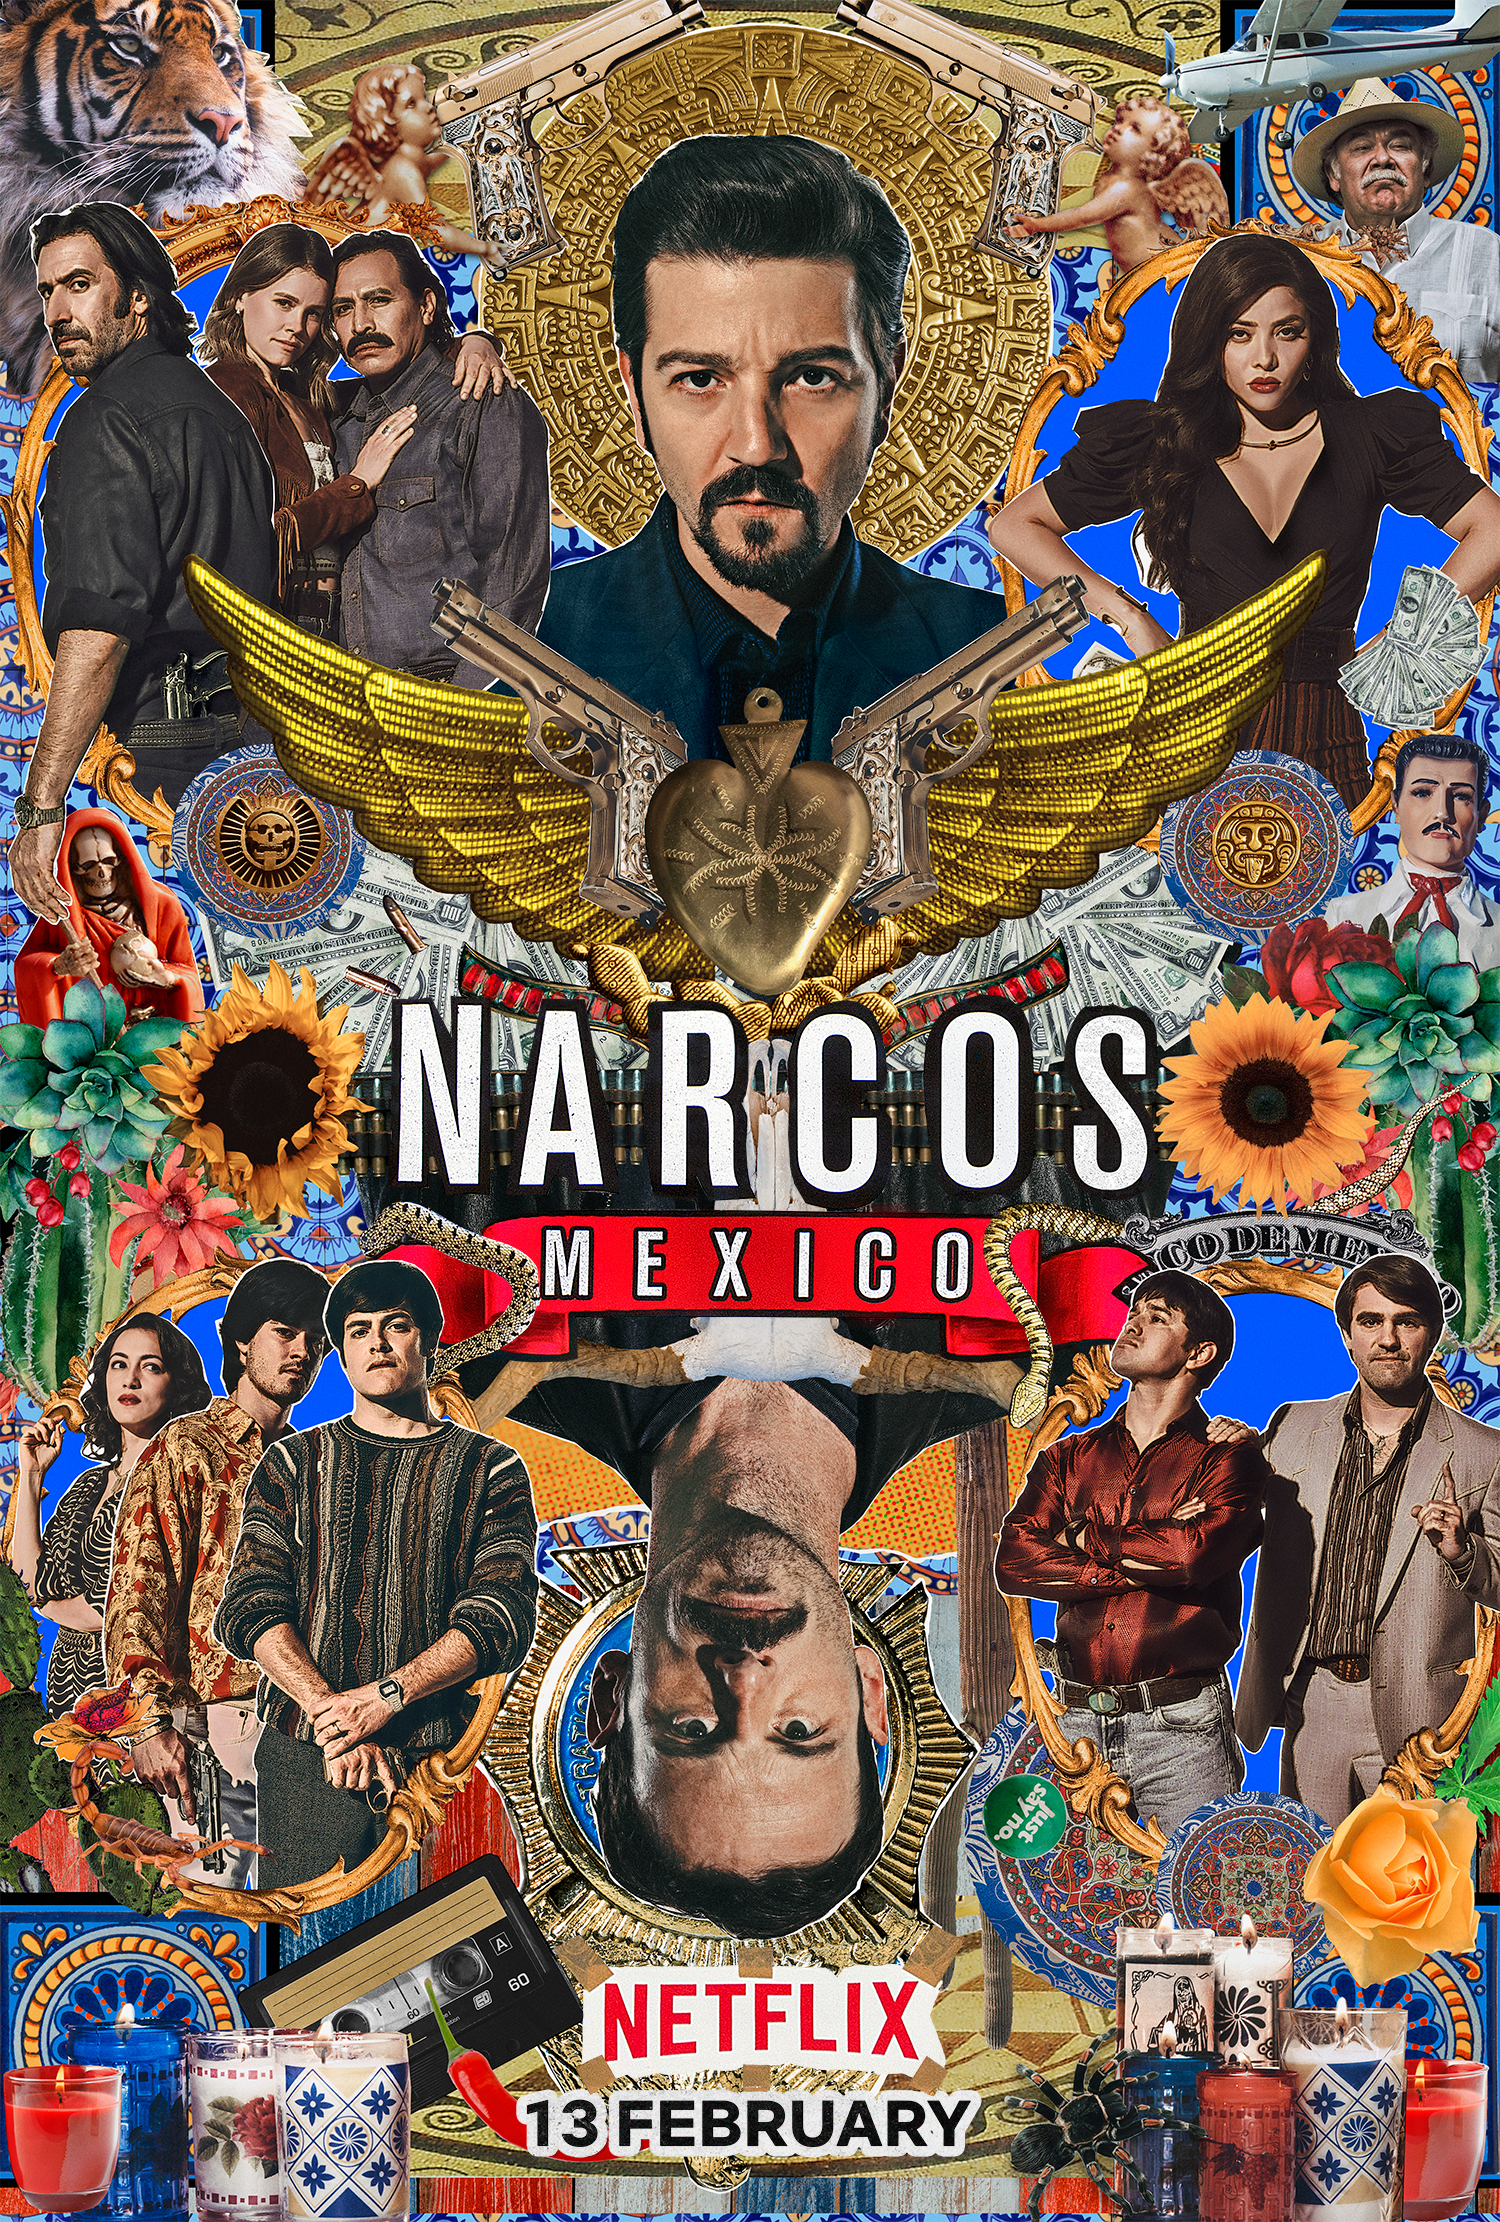 Stiahni si Seriál Narcos: Mexiko / Narcos: Mexico S02E06 (CZ)[TvRip][1080p][HEVC] = CSFD 86%